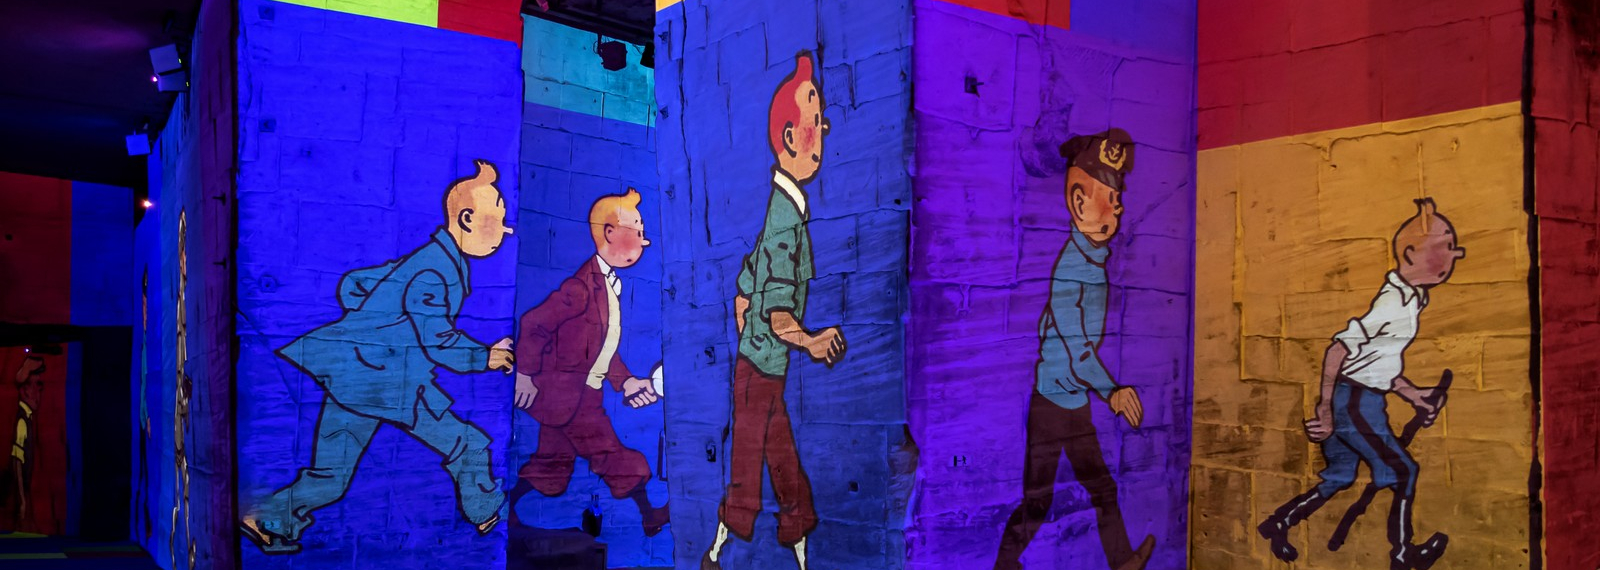 Tintin, l’aventure immersive